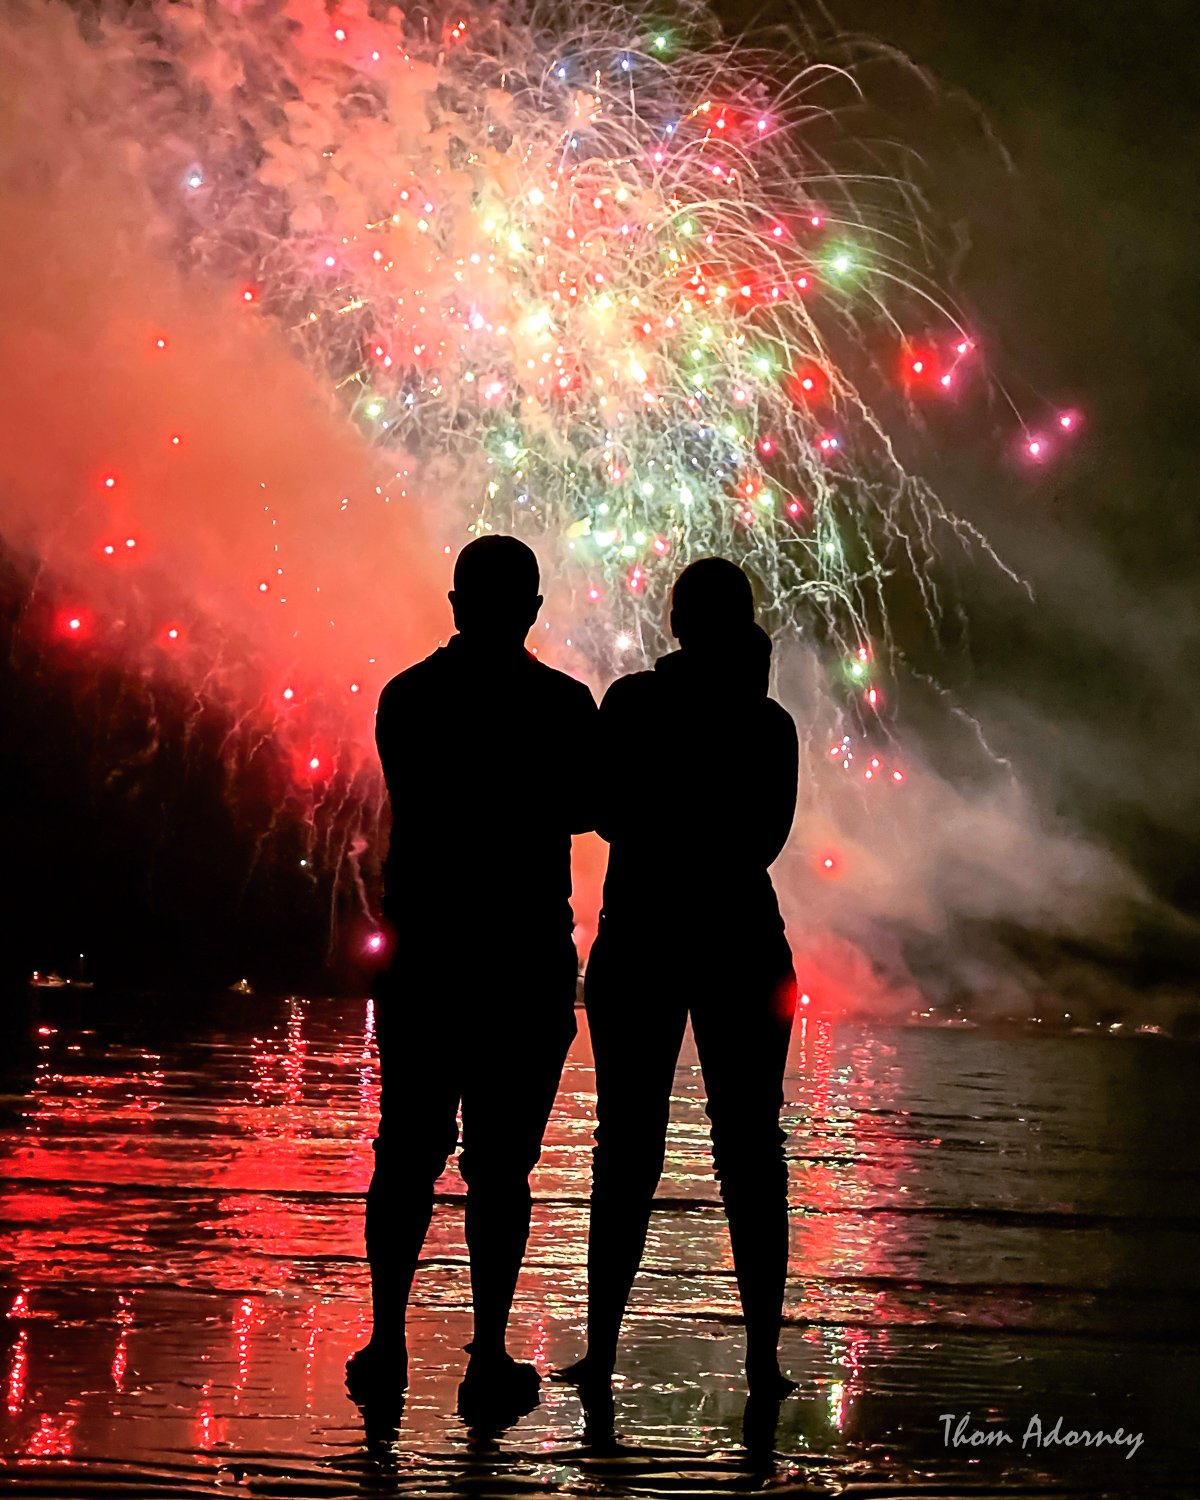 Thom Adorney - Fireworks on the Beach.jpg